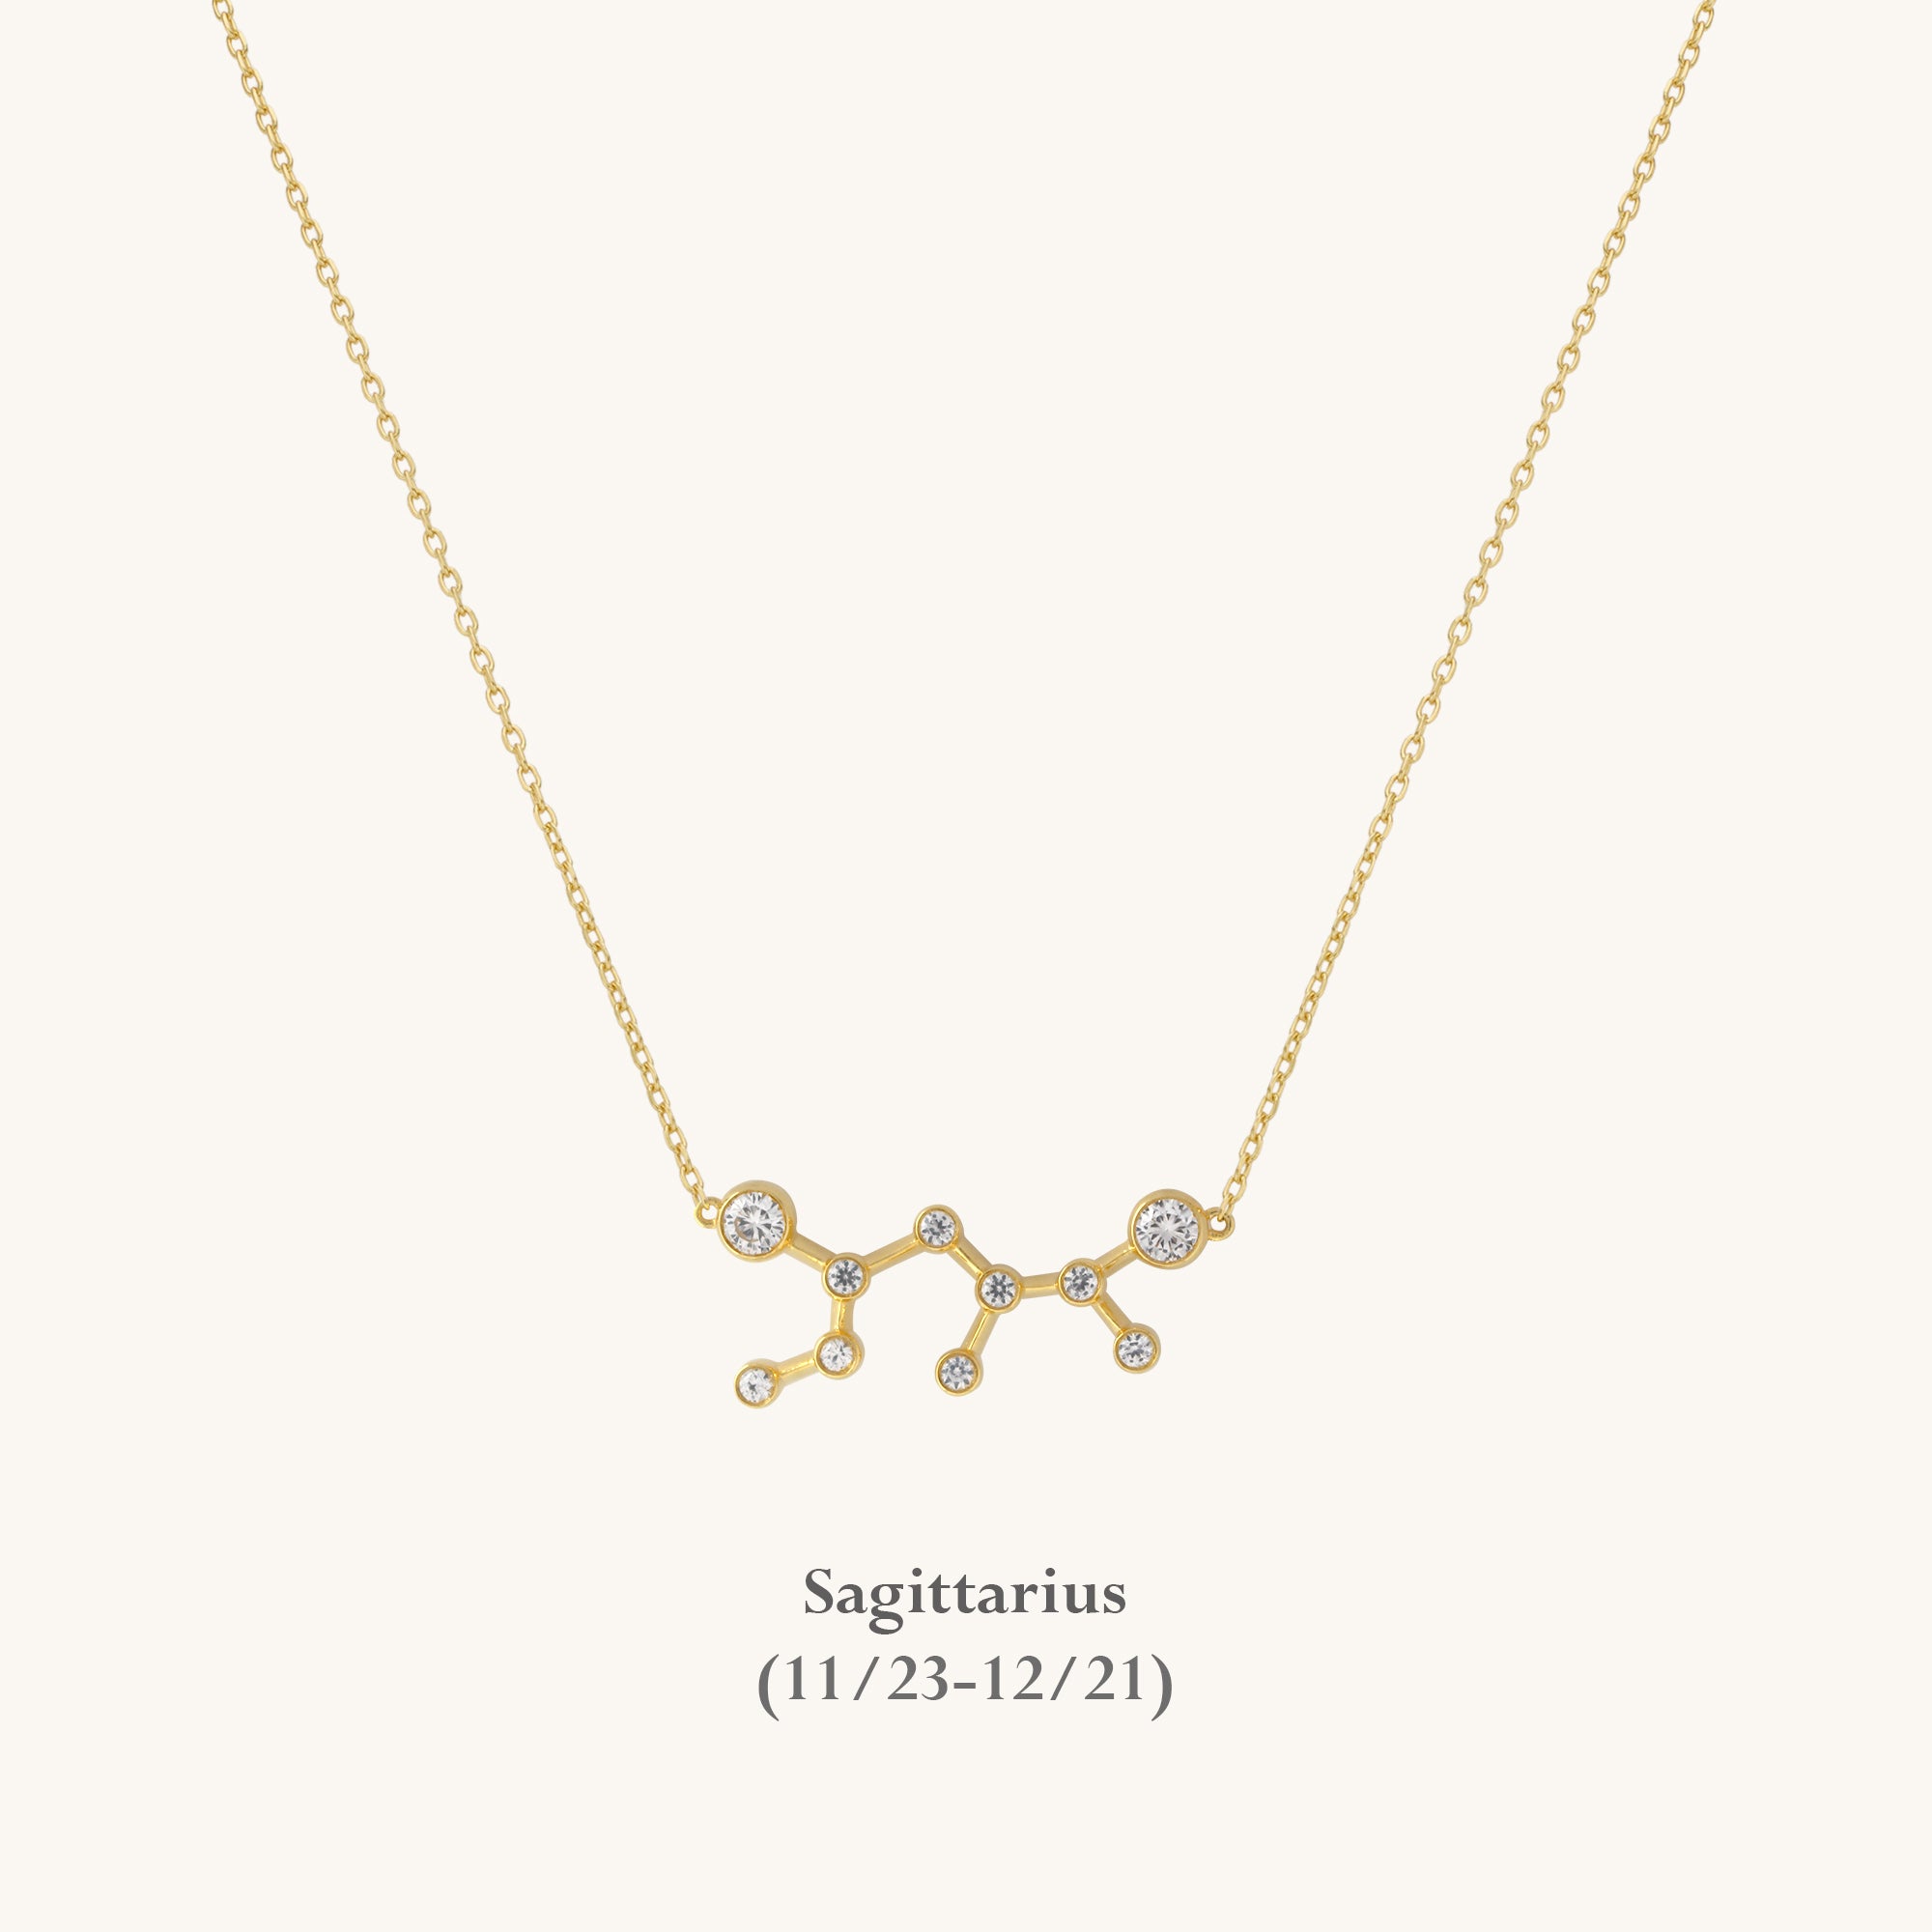 Diamond Constellation Necklace